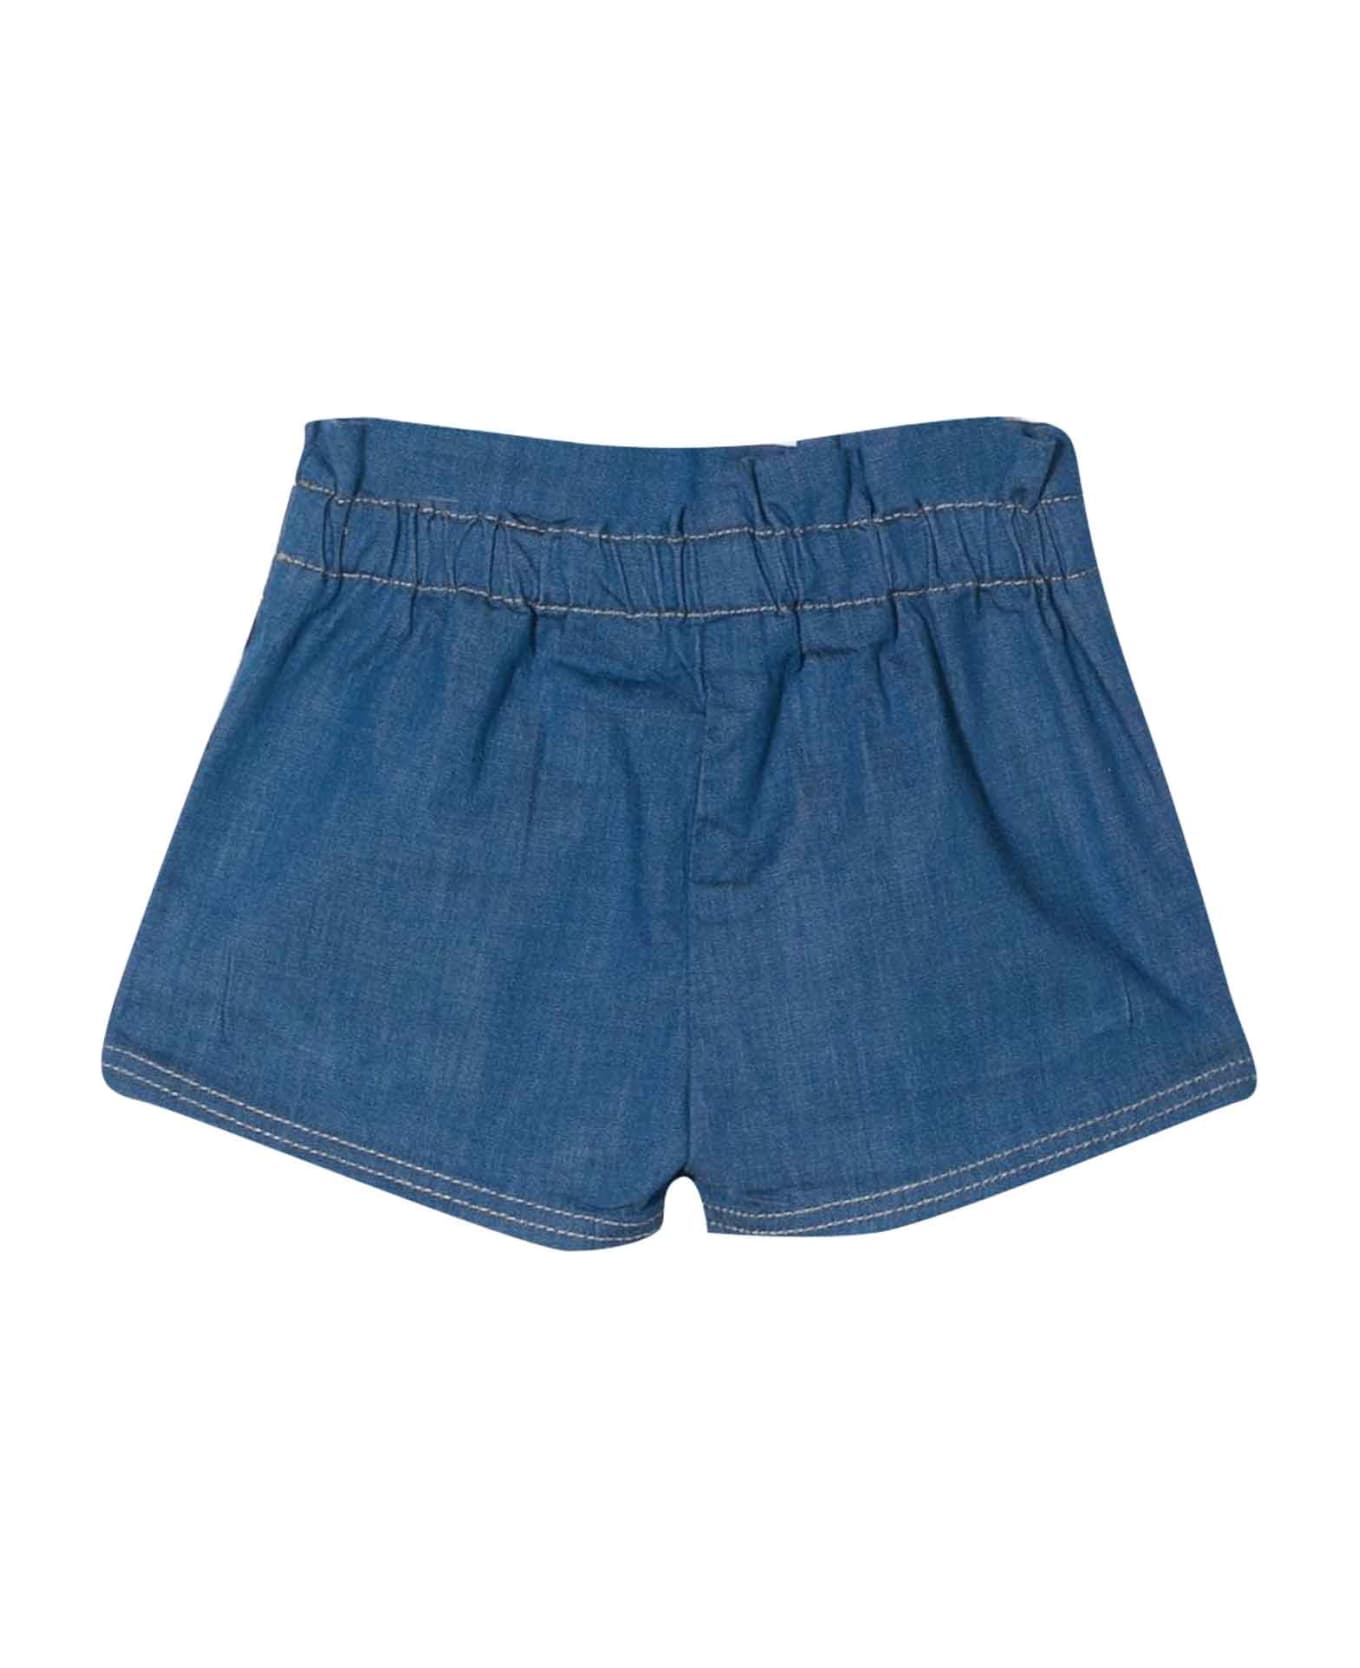 Moncler Denim Shorts Unisex - DENIM BLUE